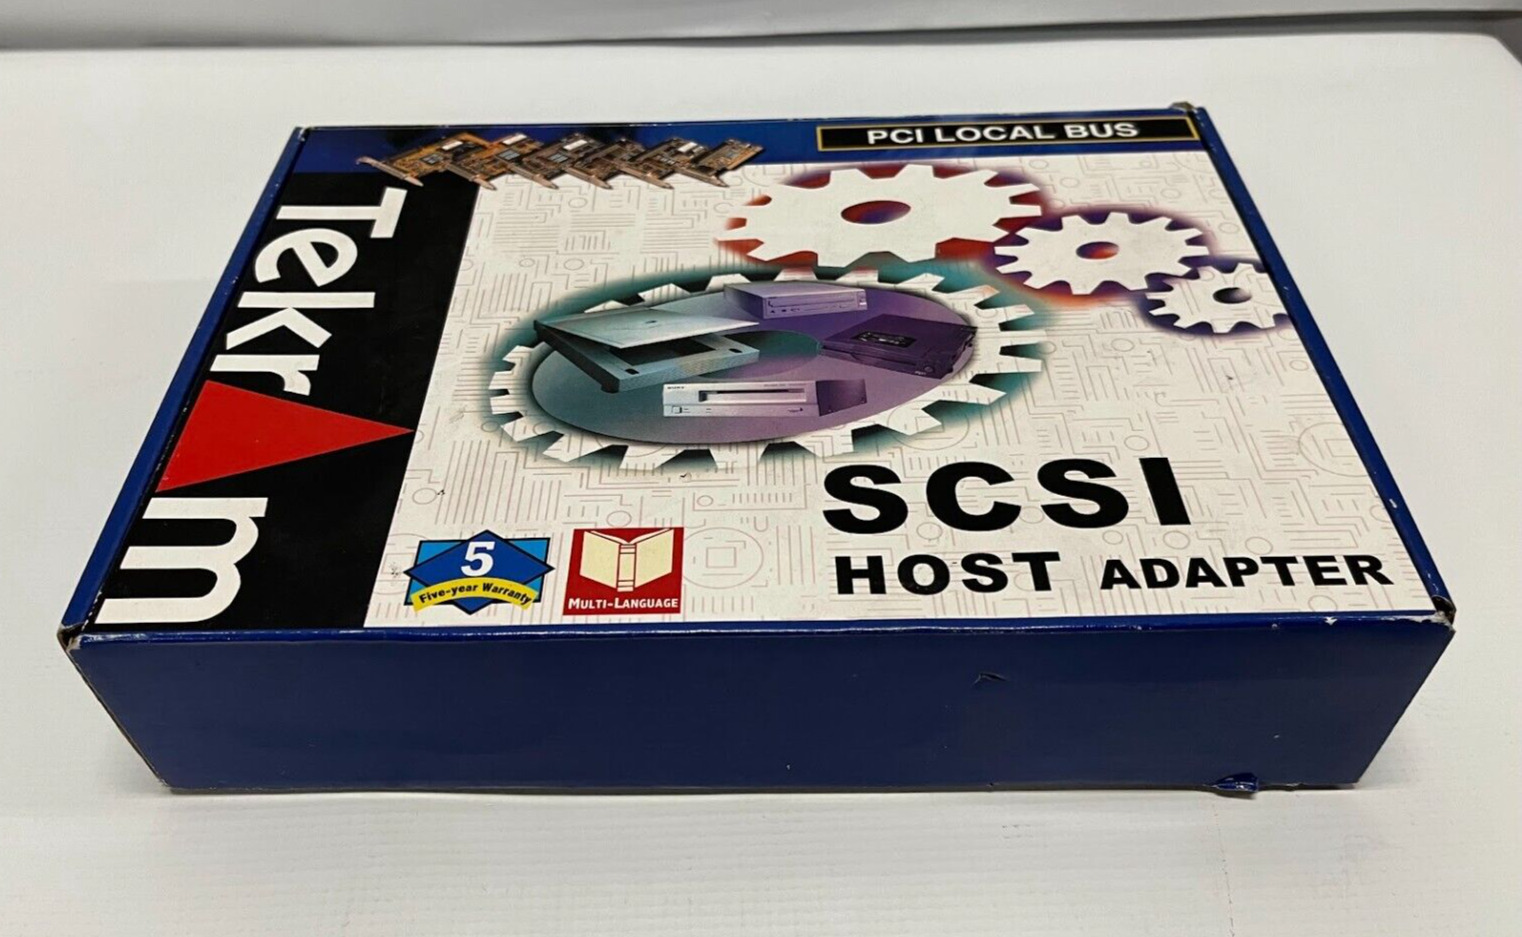 Tekram SCSI Host Adapter PCI Local Bus DC-390U2B - (Vintage, 1999)